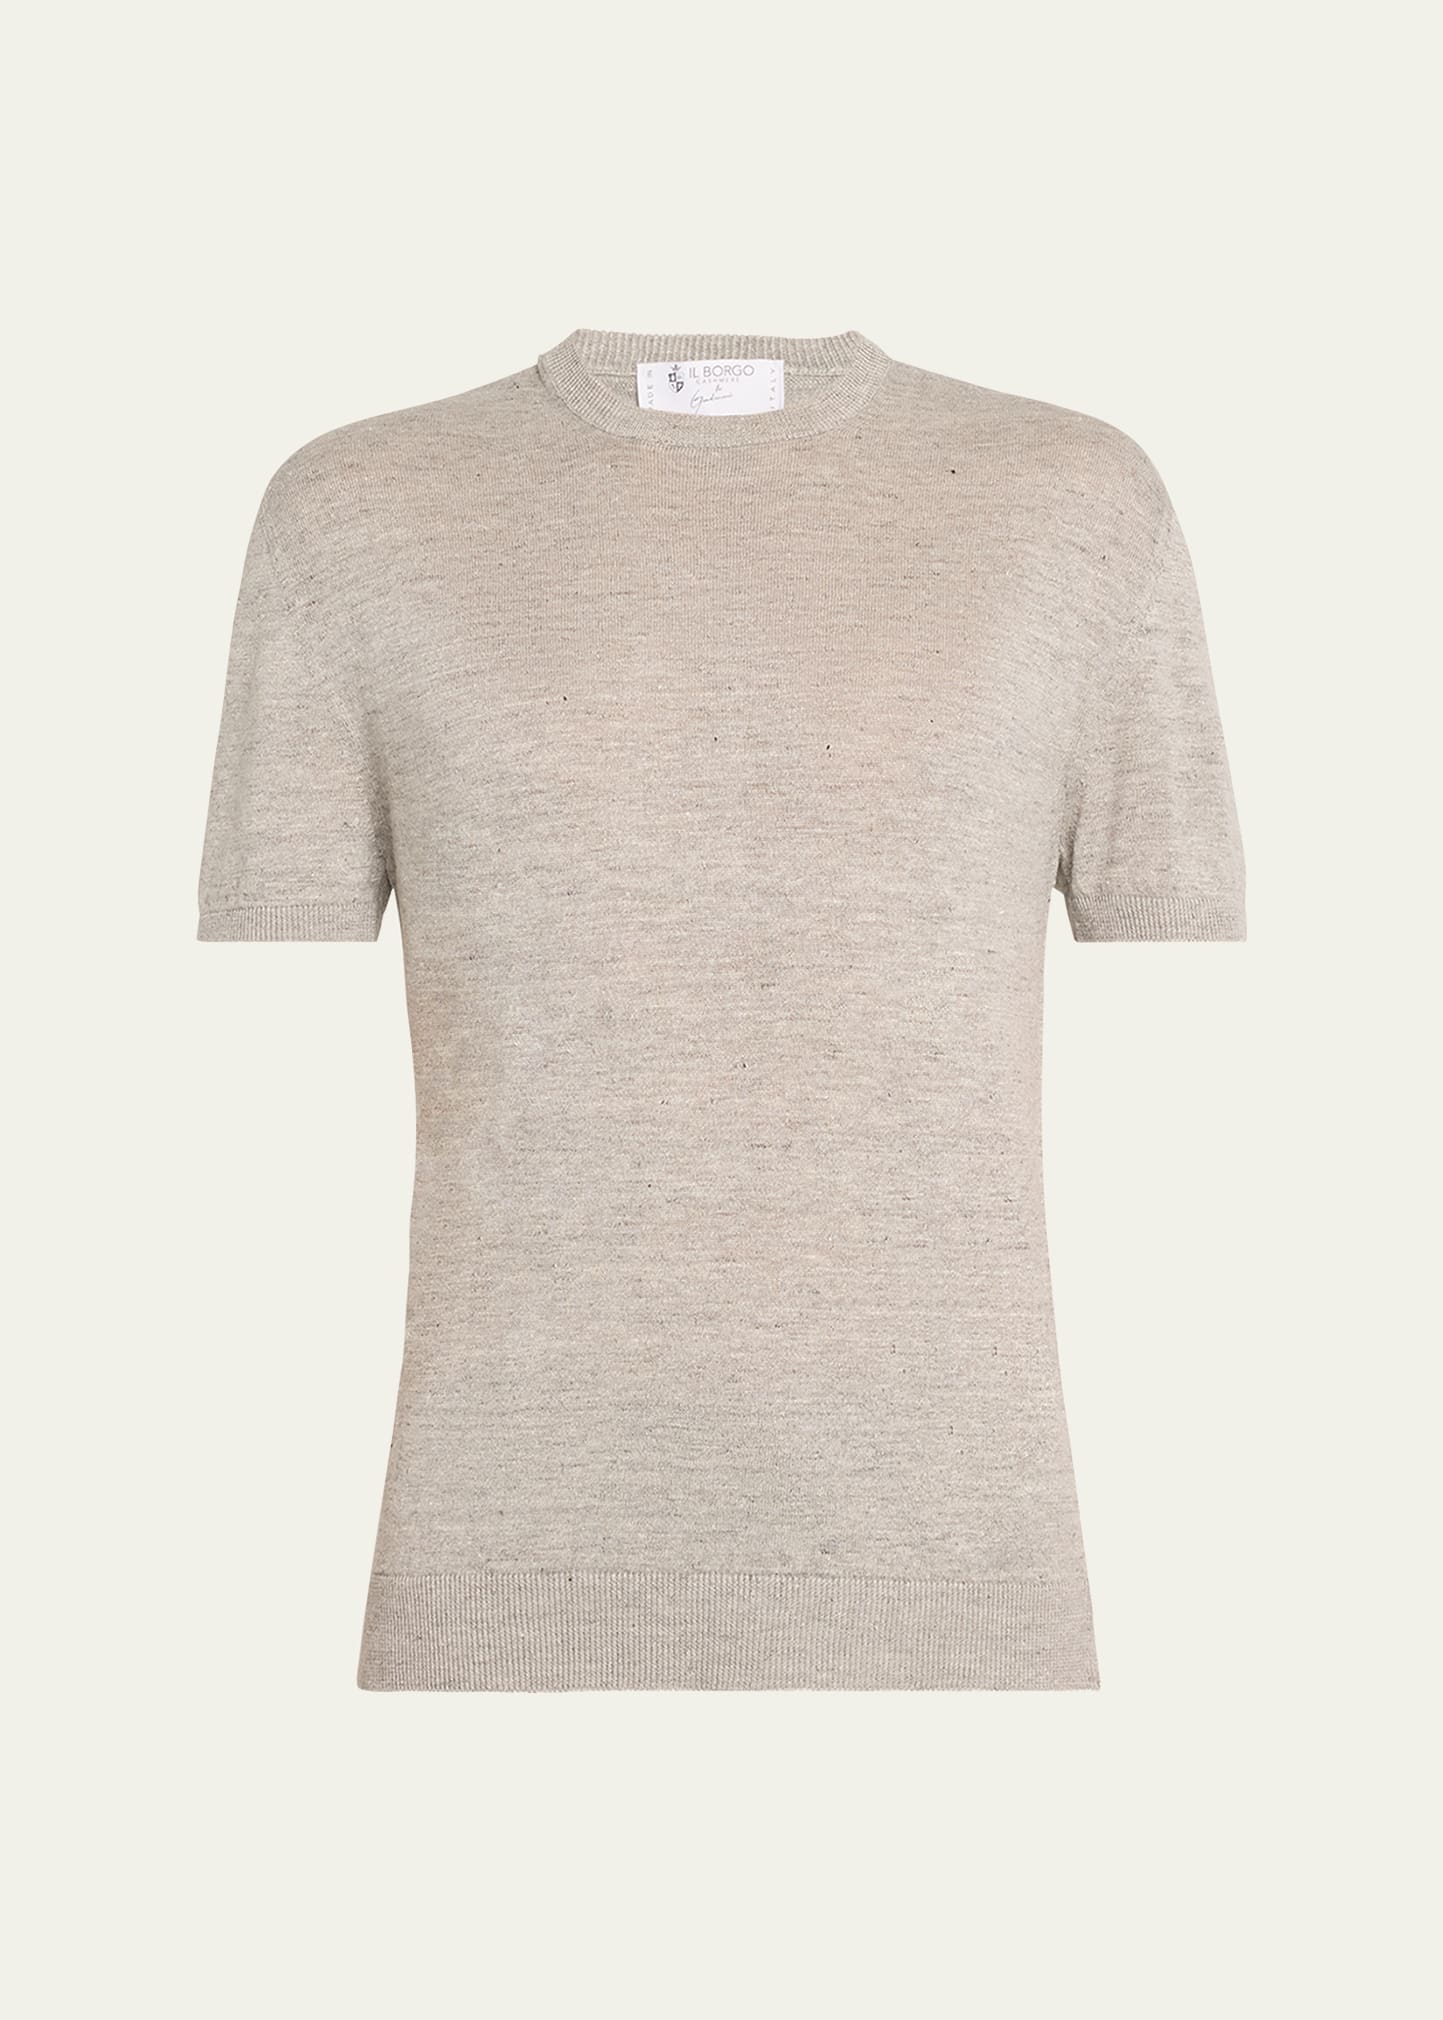 Men's Knit Crewneck Linen-Cotton Sweater Shirt